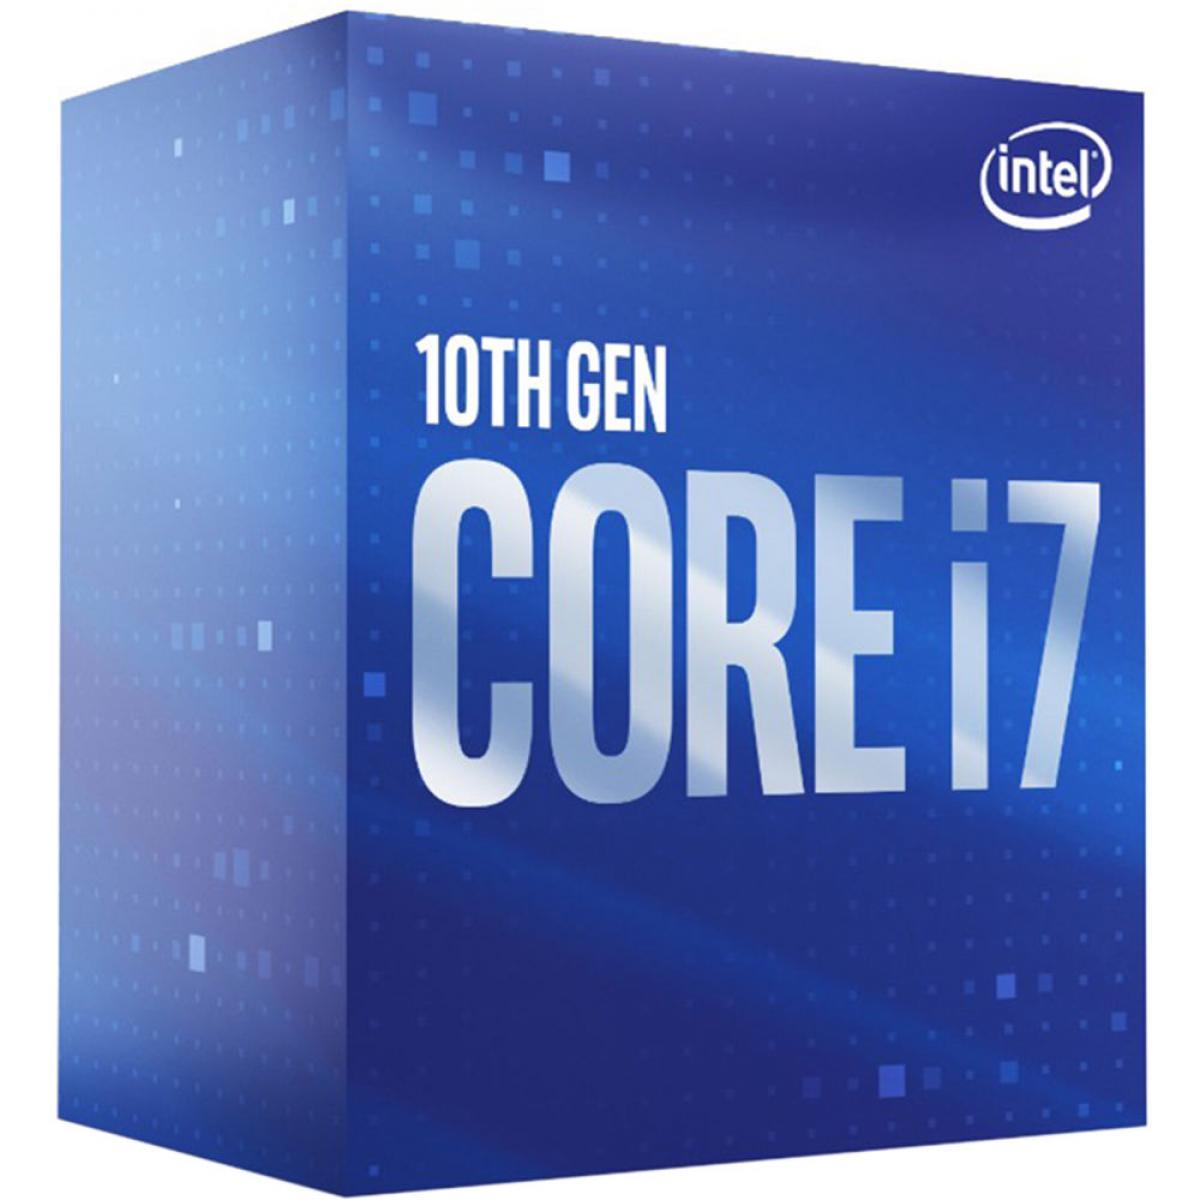 INTEL Computer Processors Intel® Core™ i7-10700F 10th 8-core Up to 4.8Ghz 16MB Processor